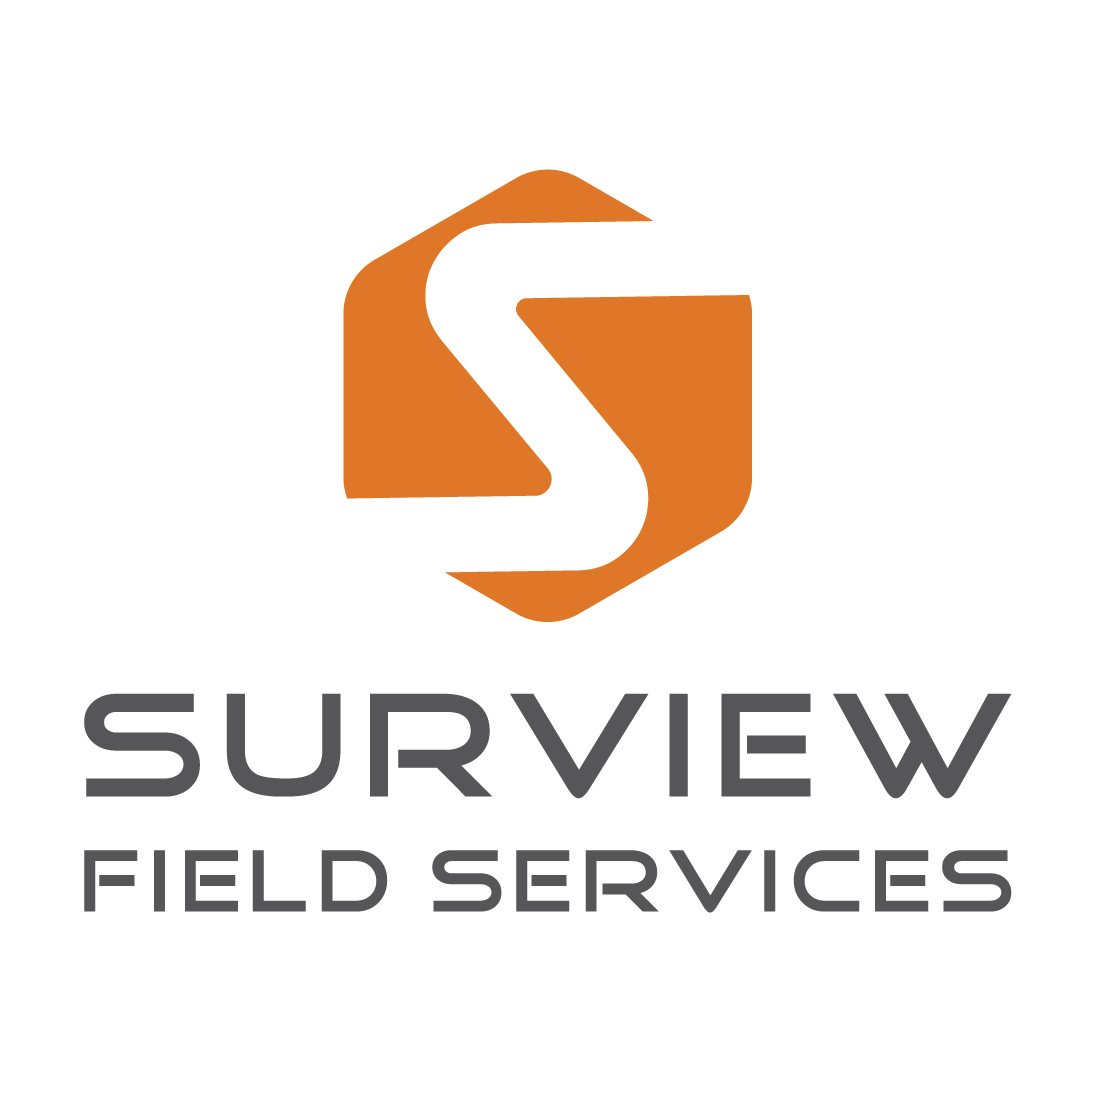 Surview Field Services